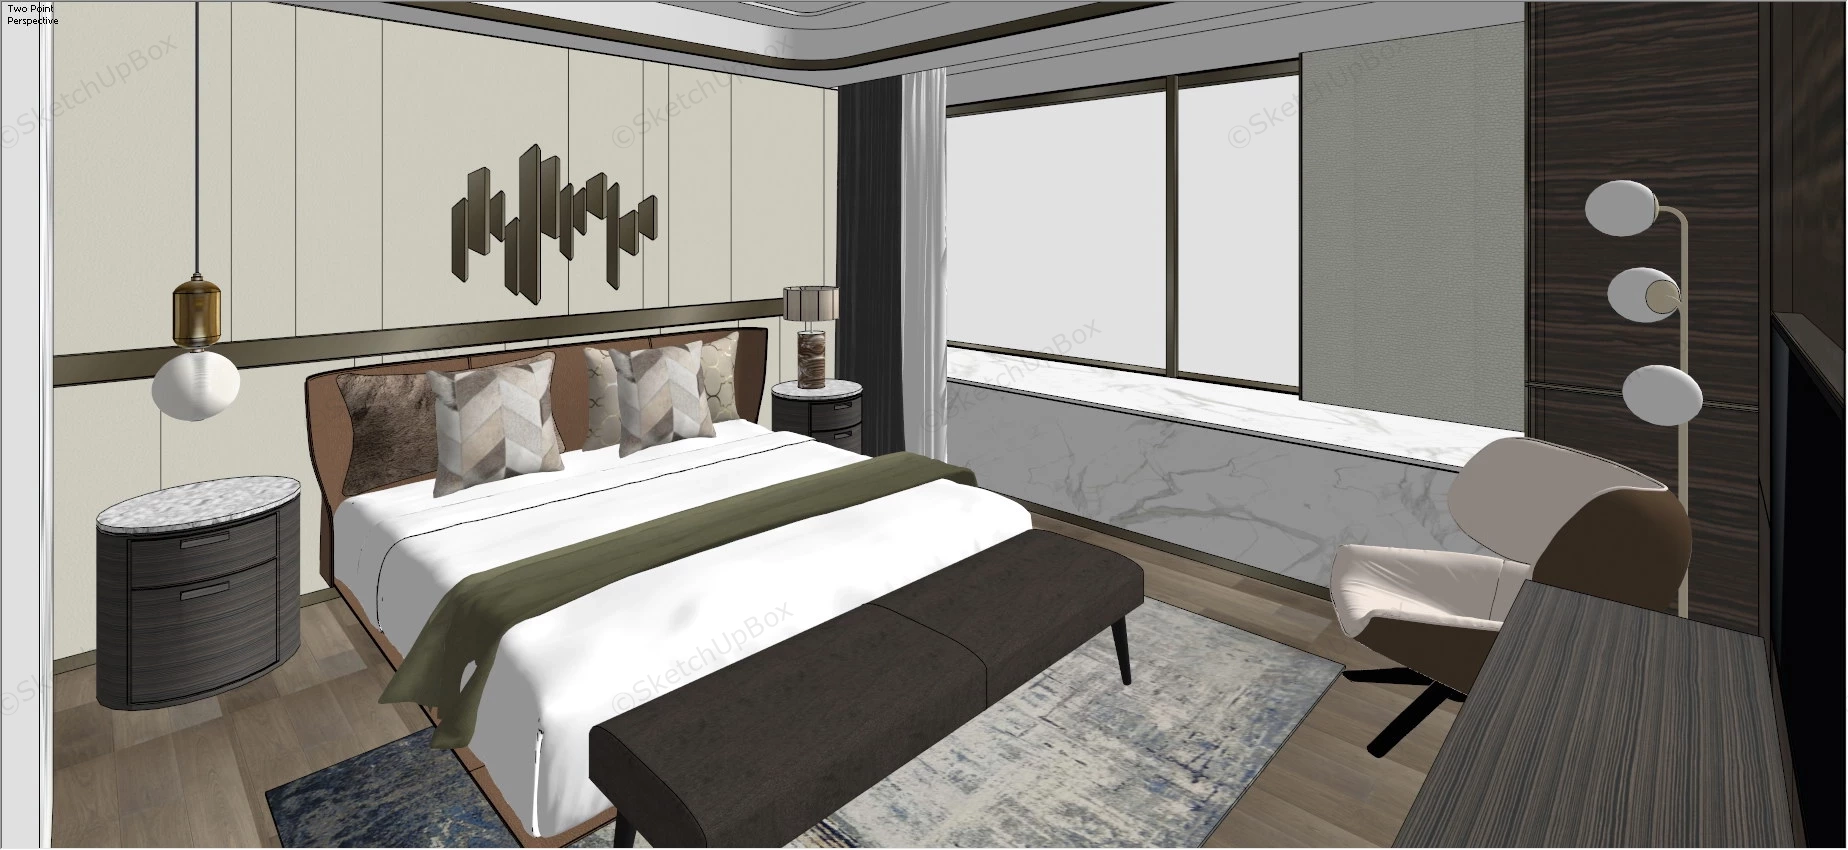 Hotel Single Room Design sketchup model preview - SketchupBox